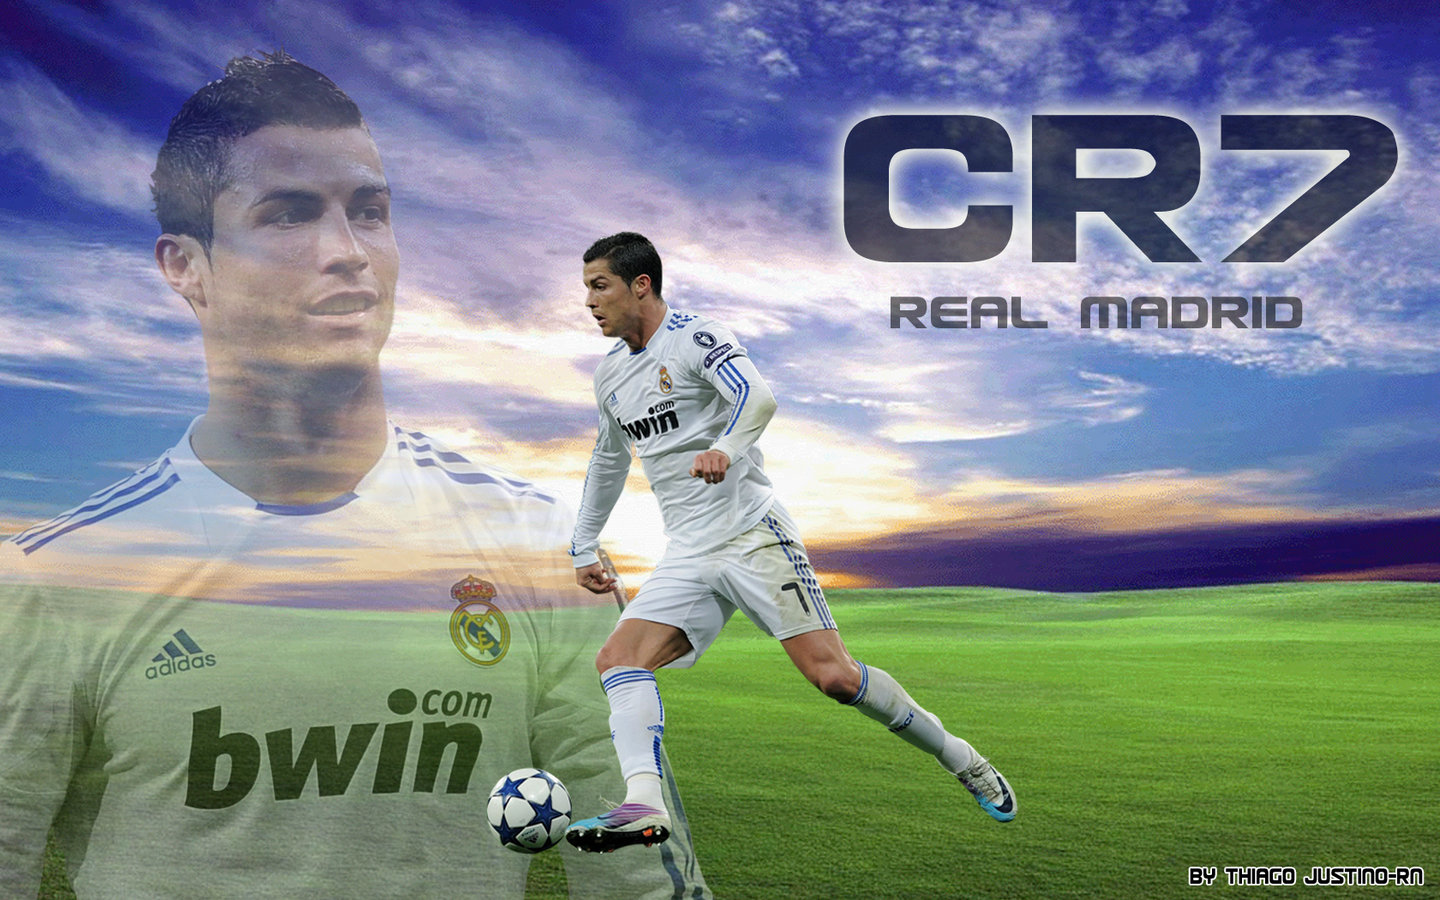 http://4.bp.blogspot.com/-FOch74aLMdI/Tq62Aa1-KzI/AAAAAAAAAwk/pEgcEwALY54/s1600/Cristiano+Ronaldo+Wallpapers2.jpg